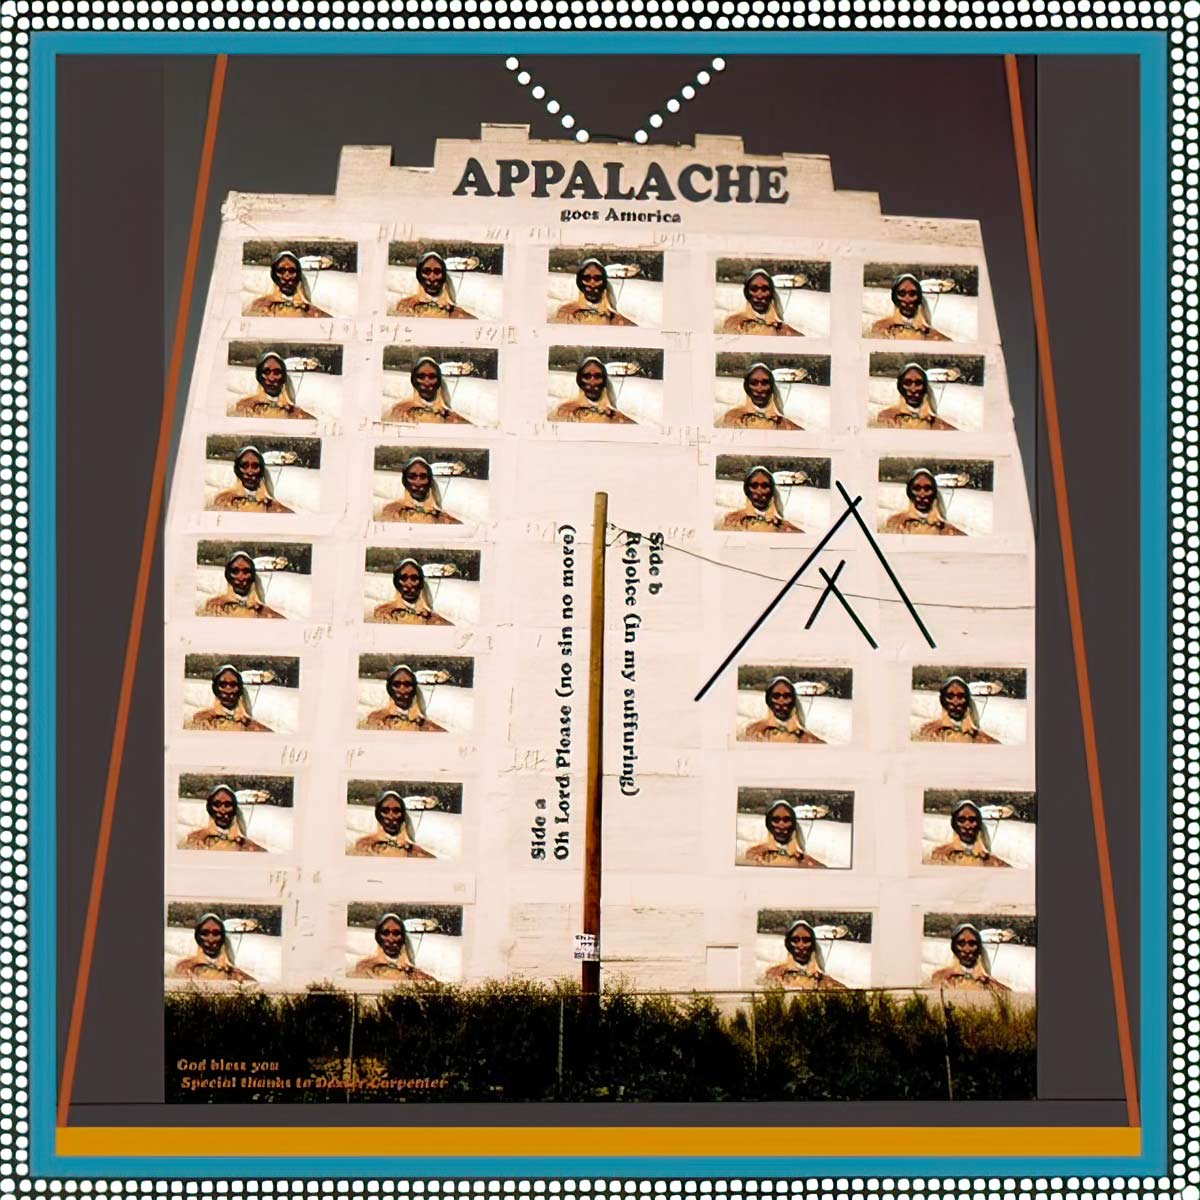 Appalache, Goes America, Digital Album Cover